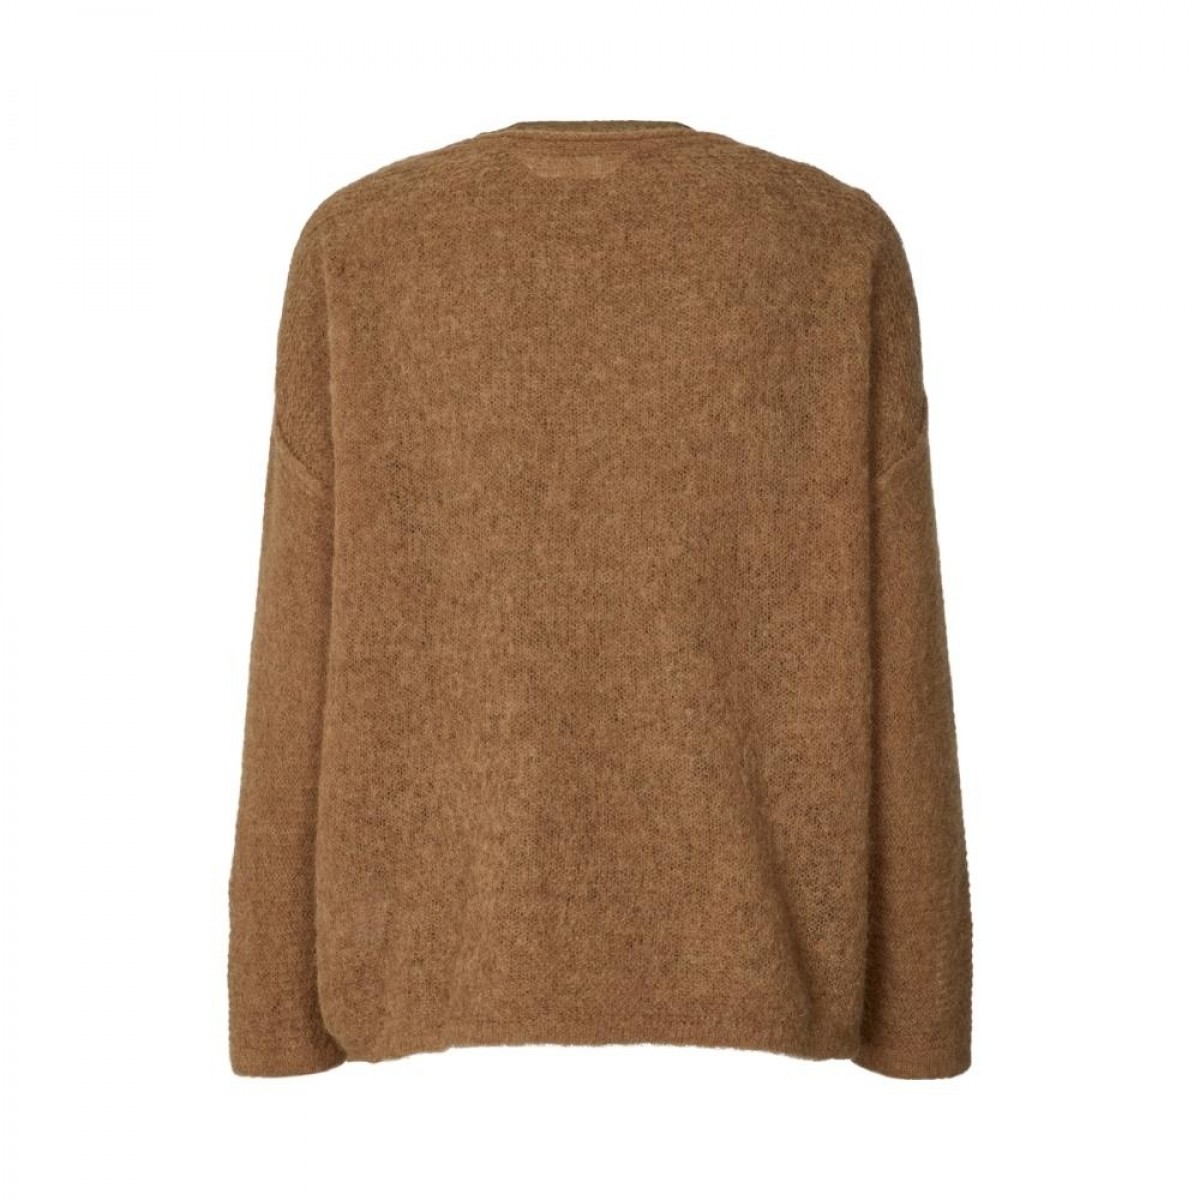 trine alpaca knit - brown mustard - ryg